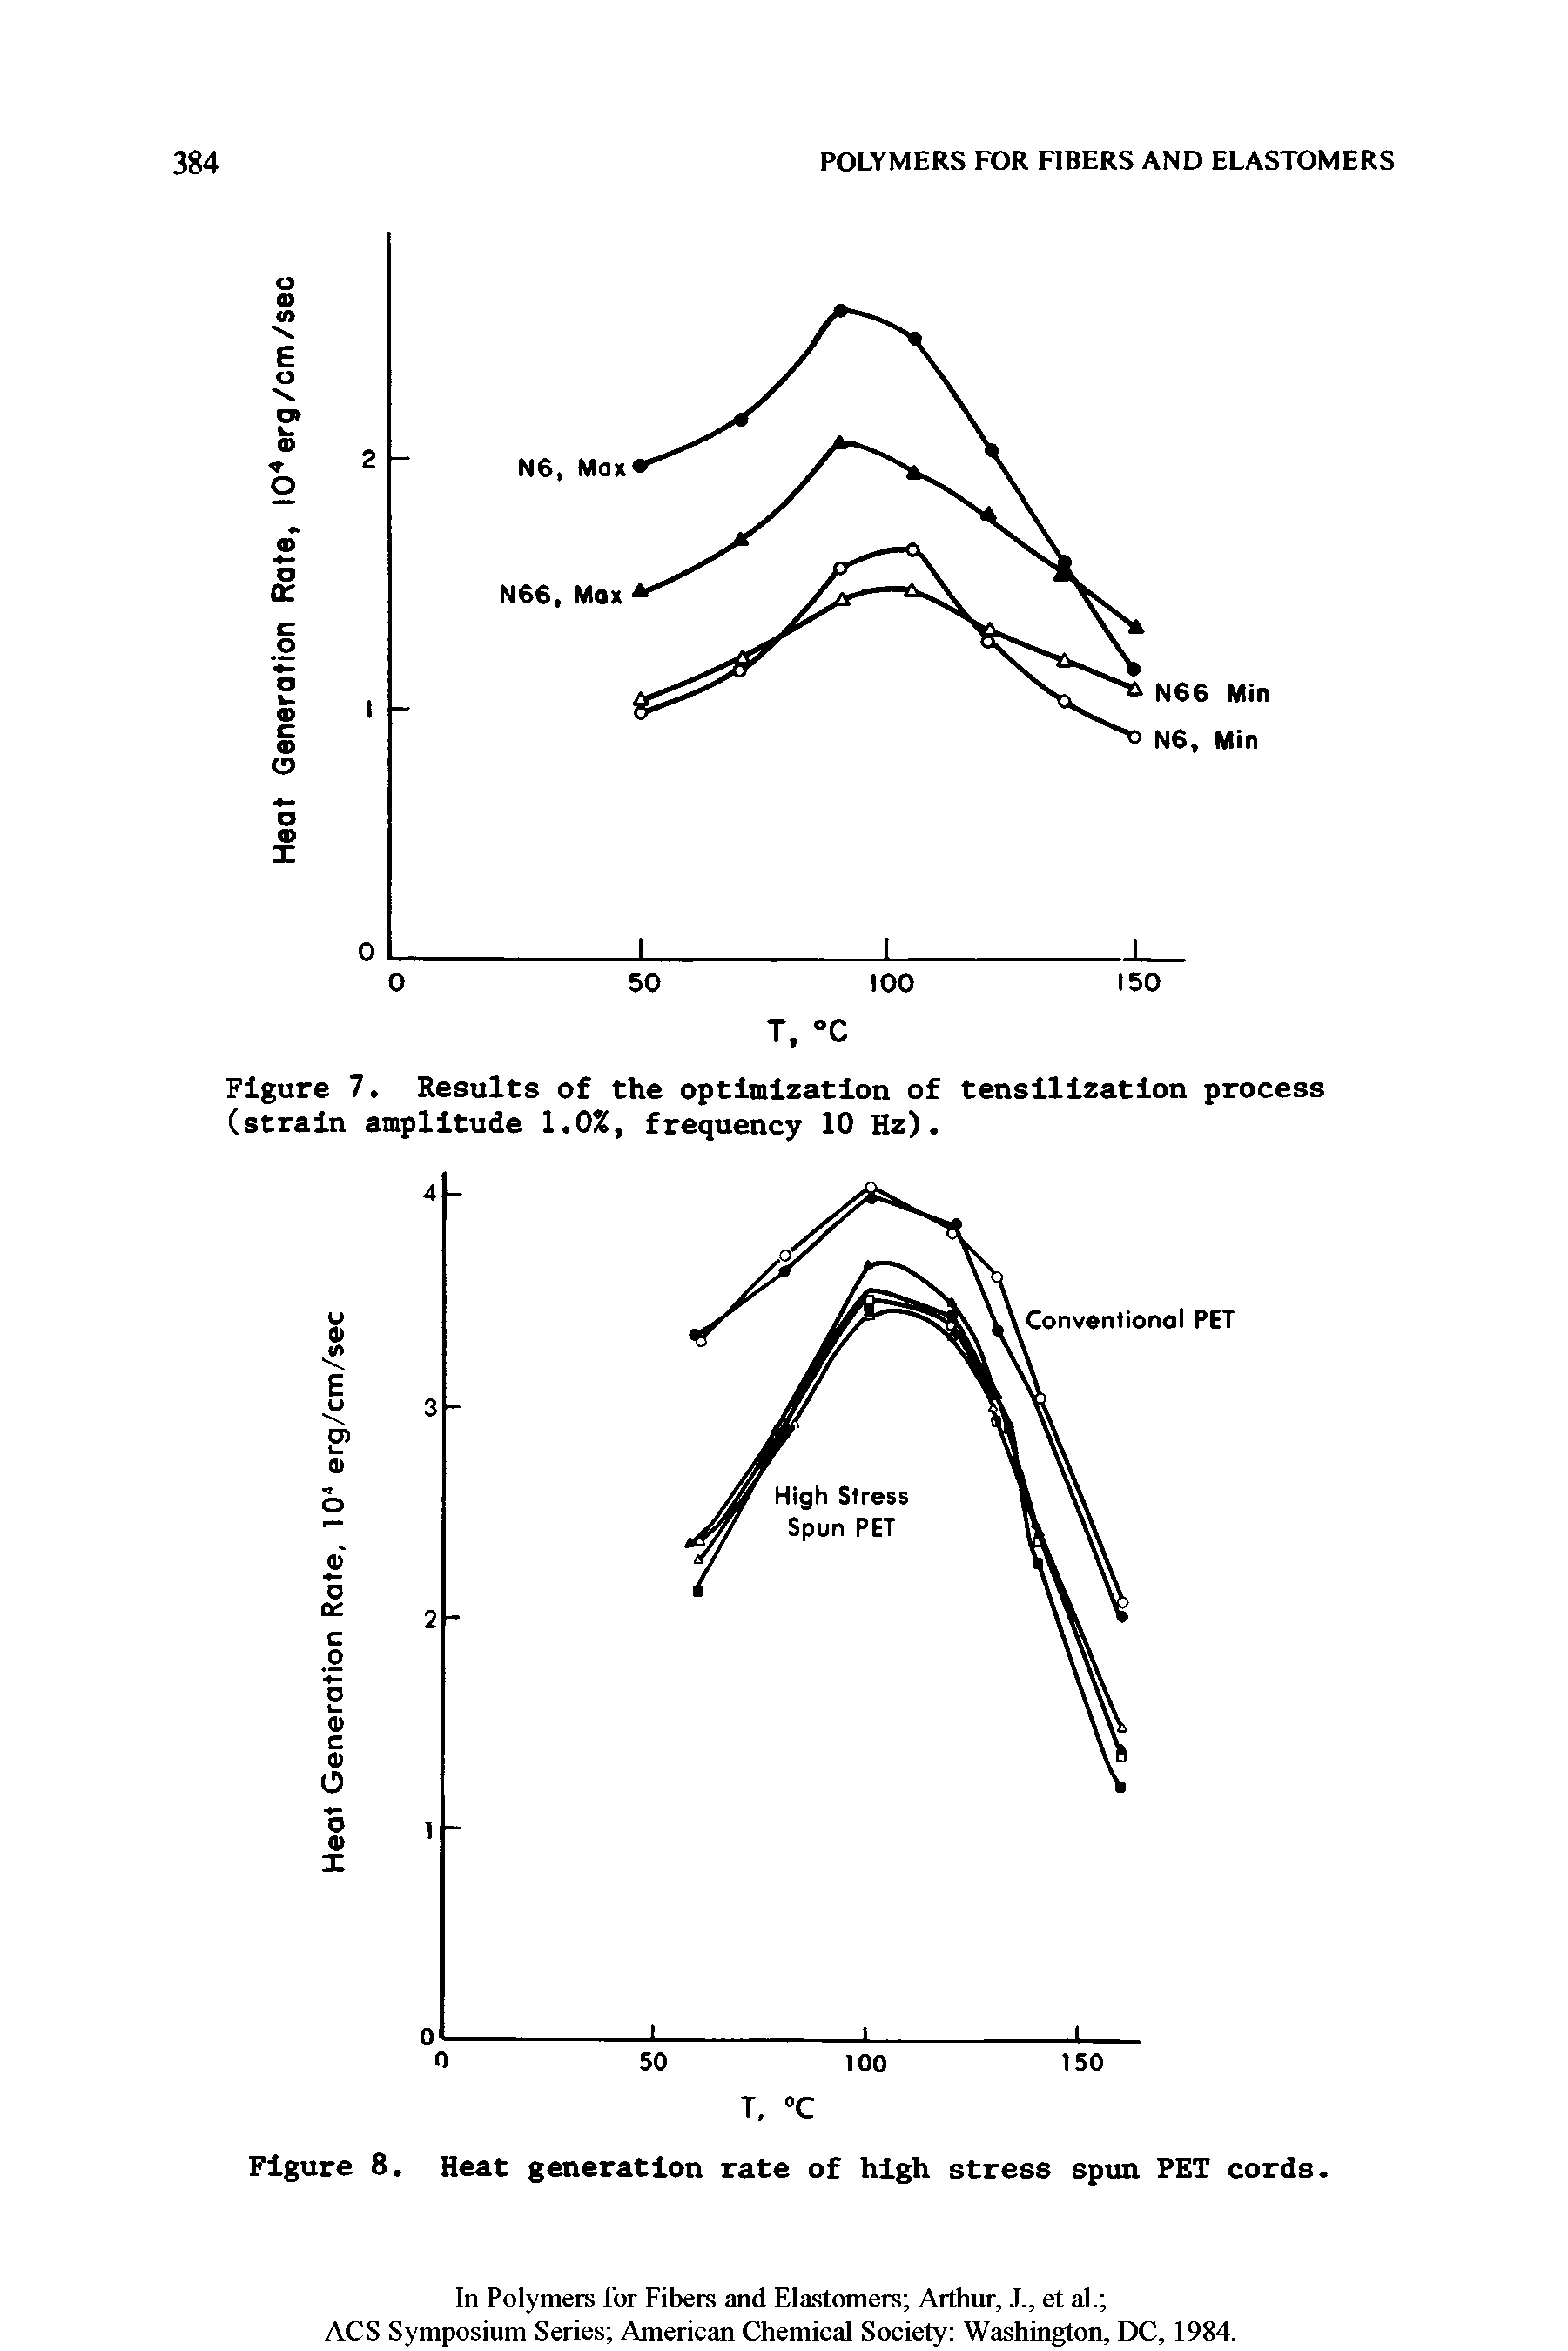 Figure Results of the optimization of tenslllzatlon process (strain amplitude 1.0%, frequency 10 Hz).